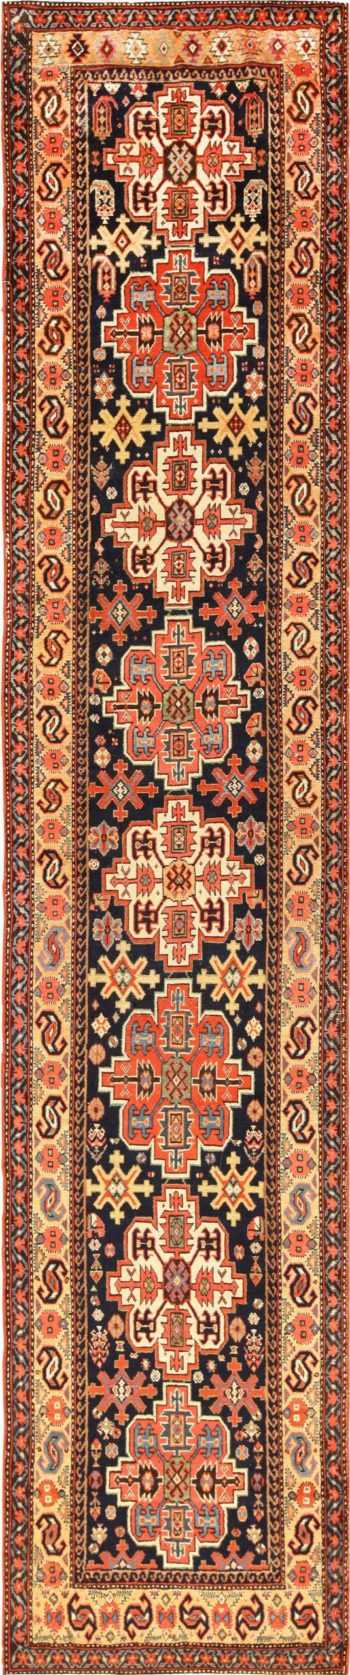 Antique Tribal Shahsavan Persian Runner Rug 49149